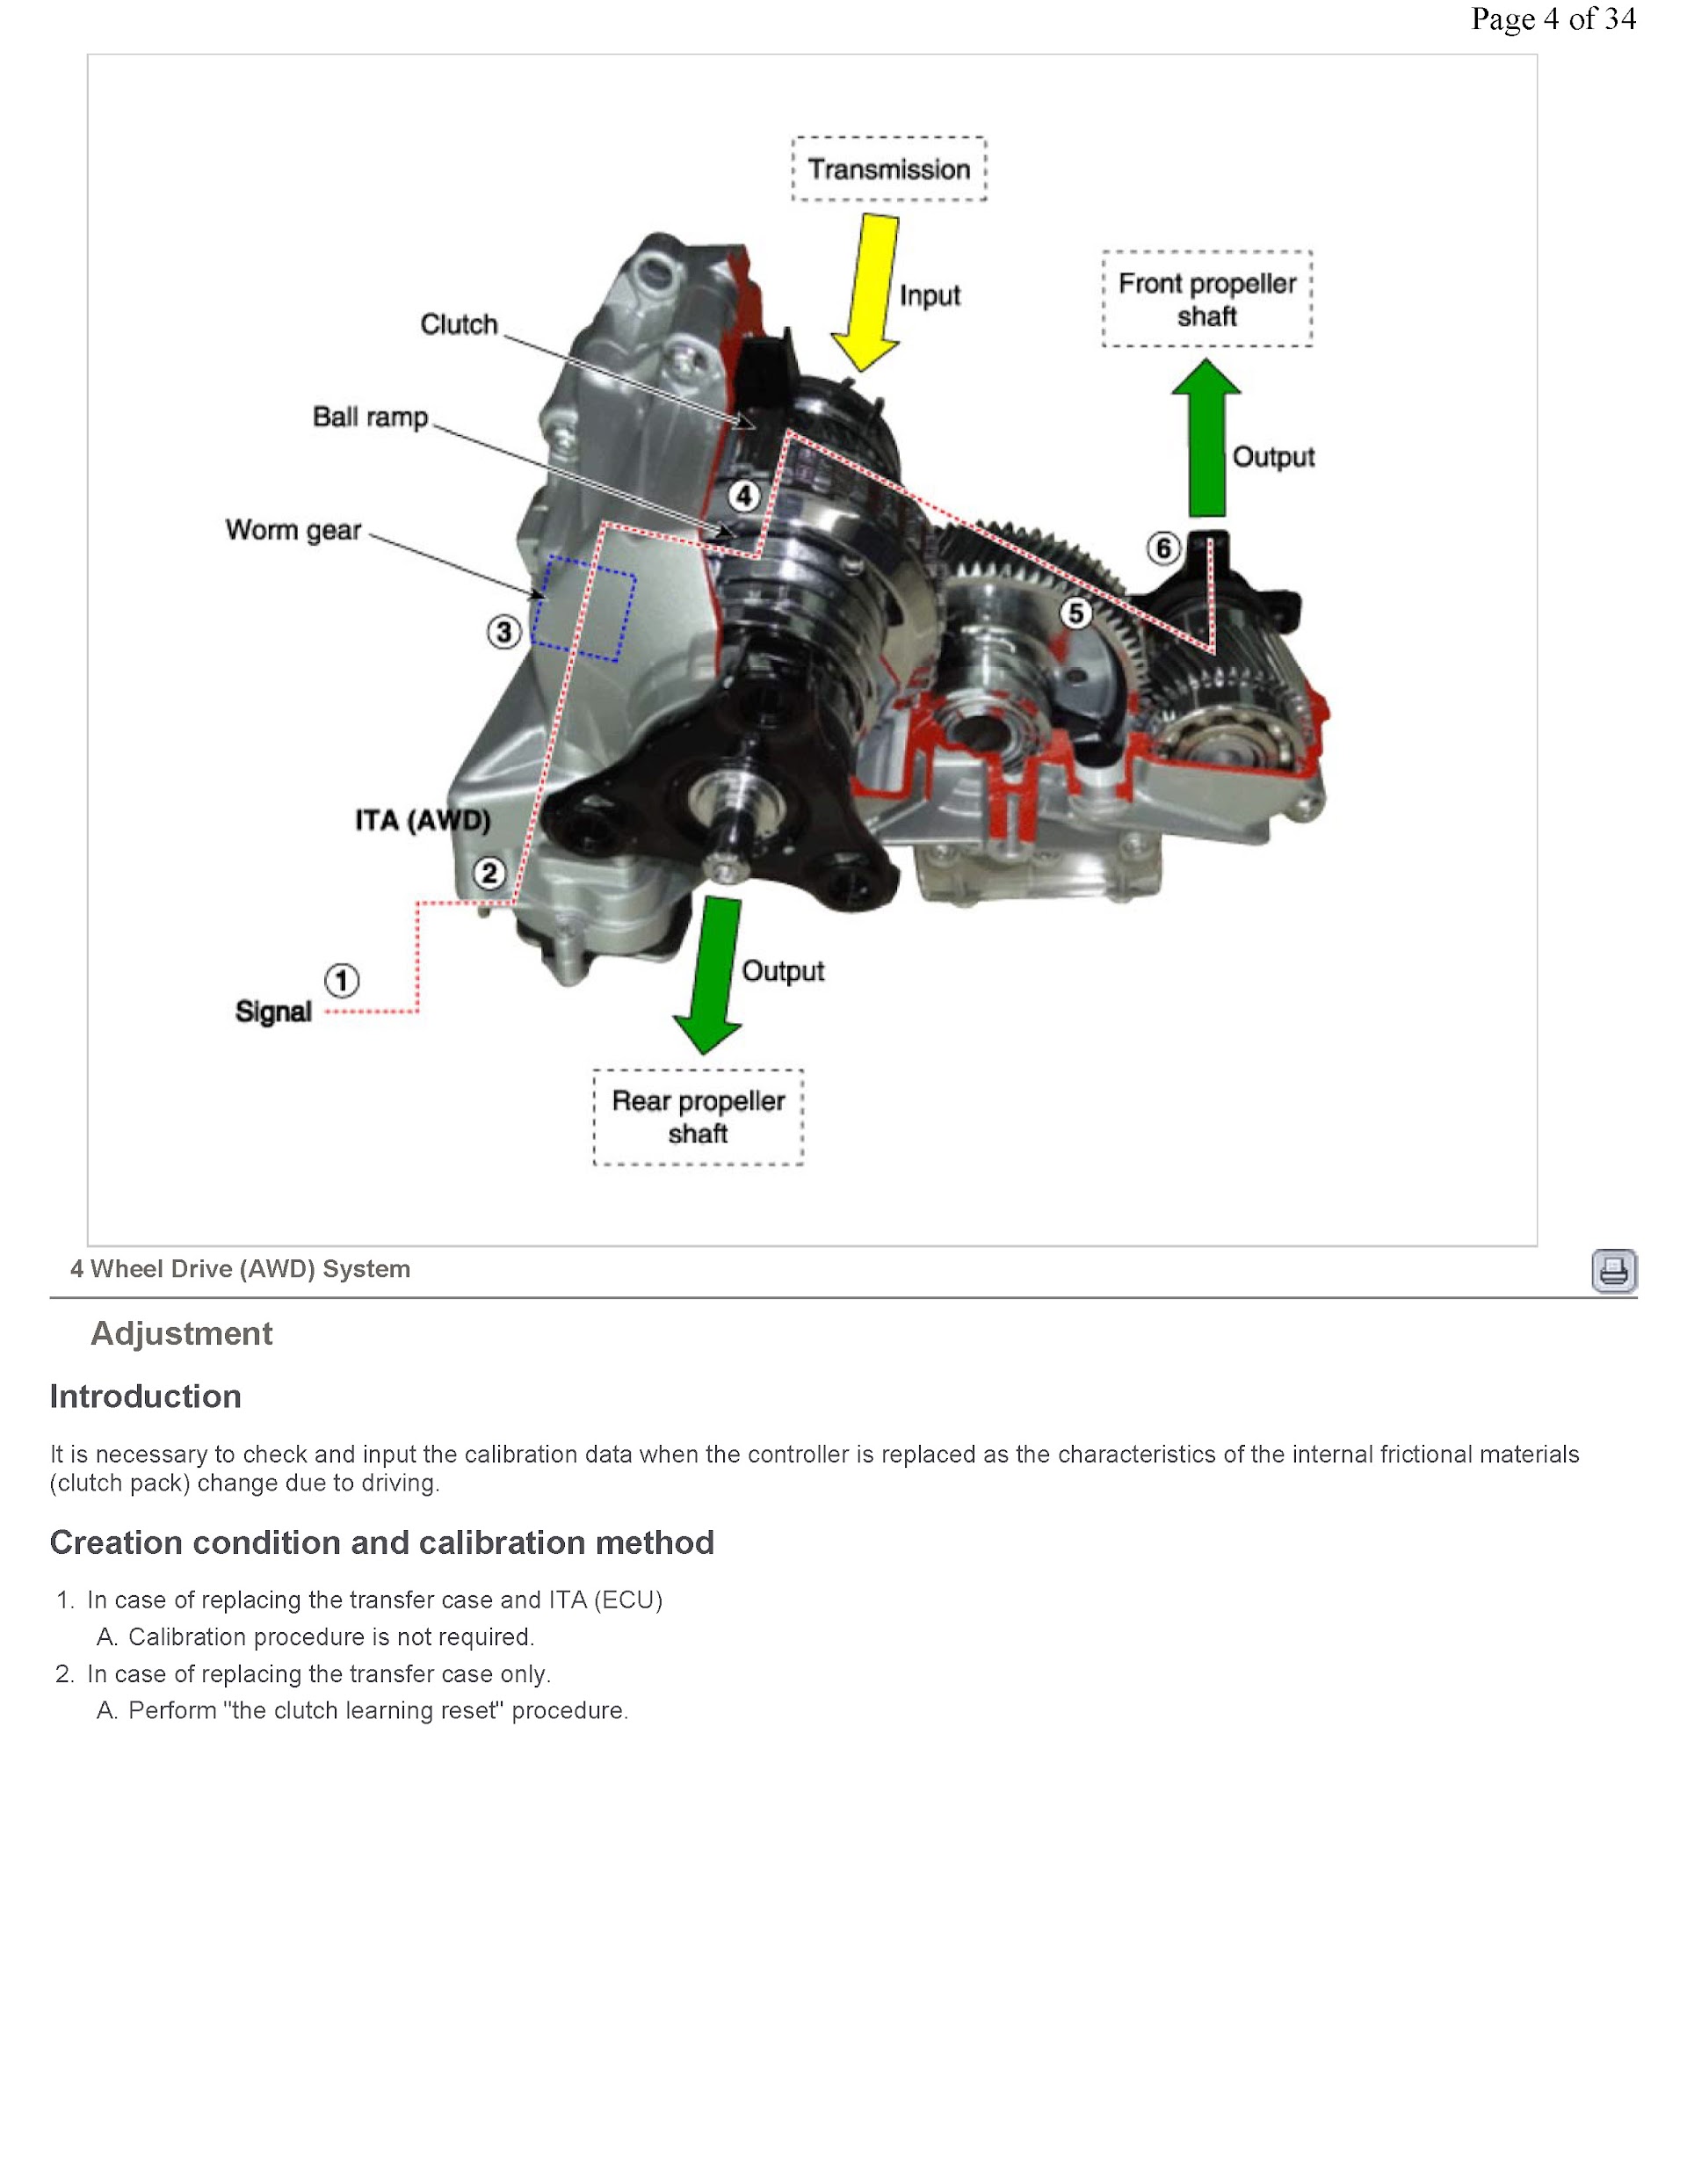 Hyundai Genesis Repair Manual, 4 Wheel Drive System